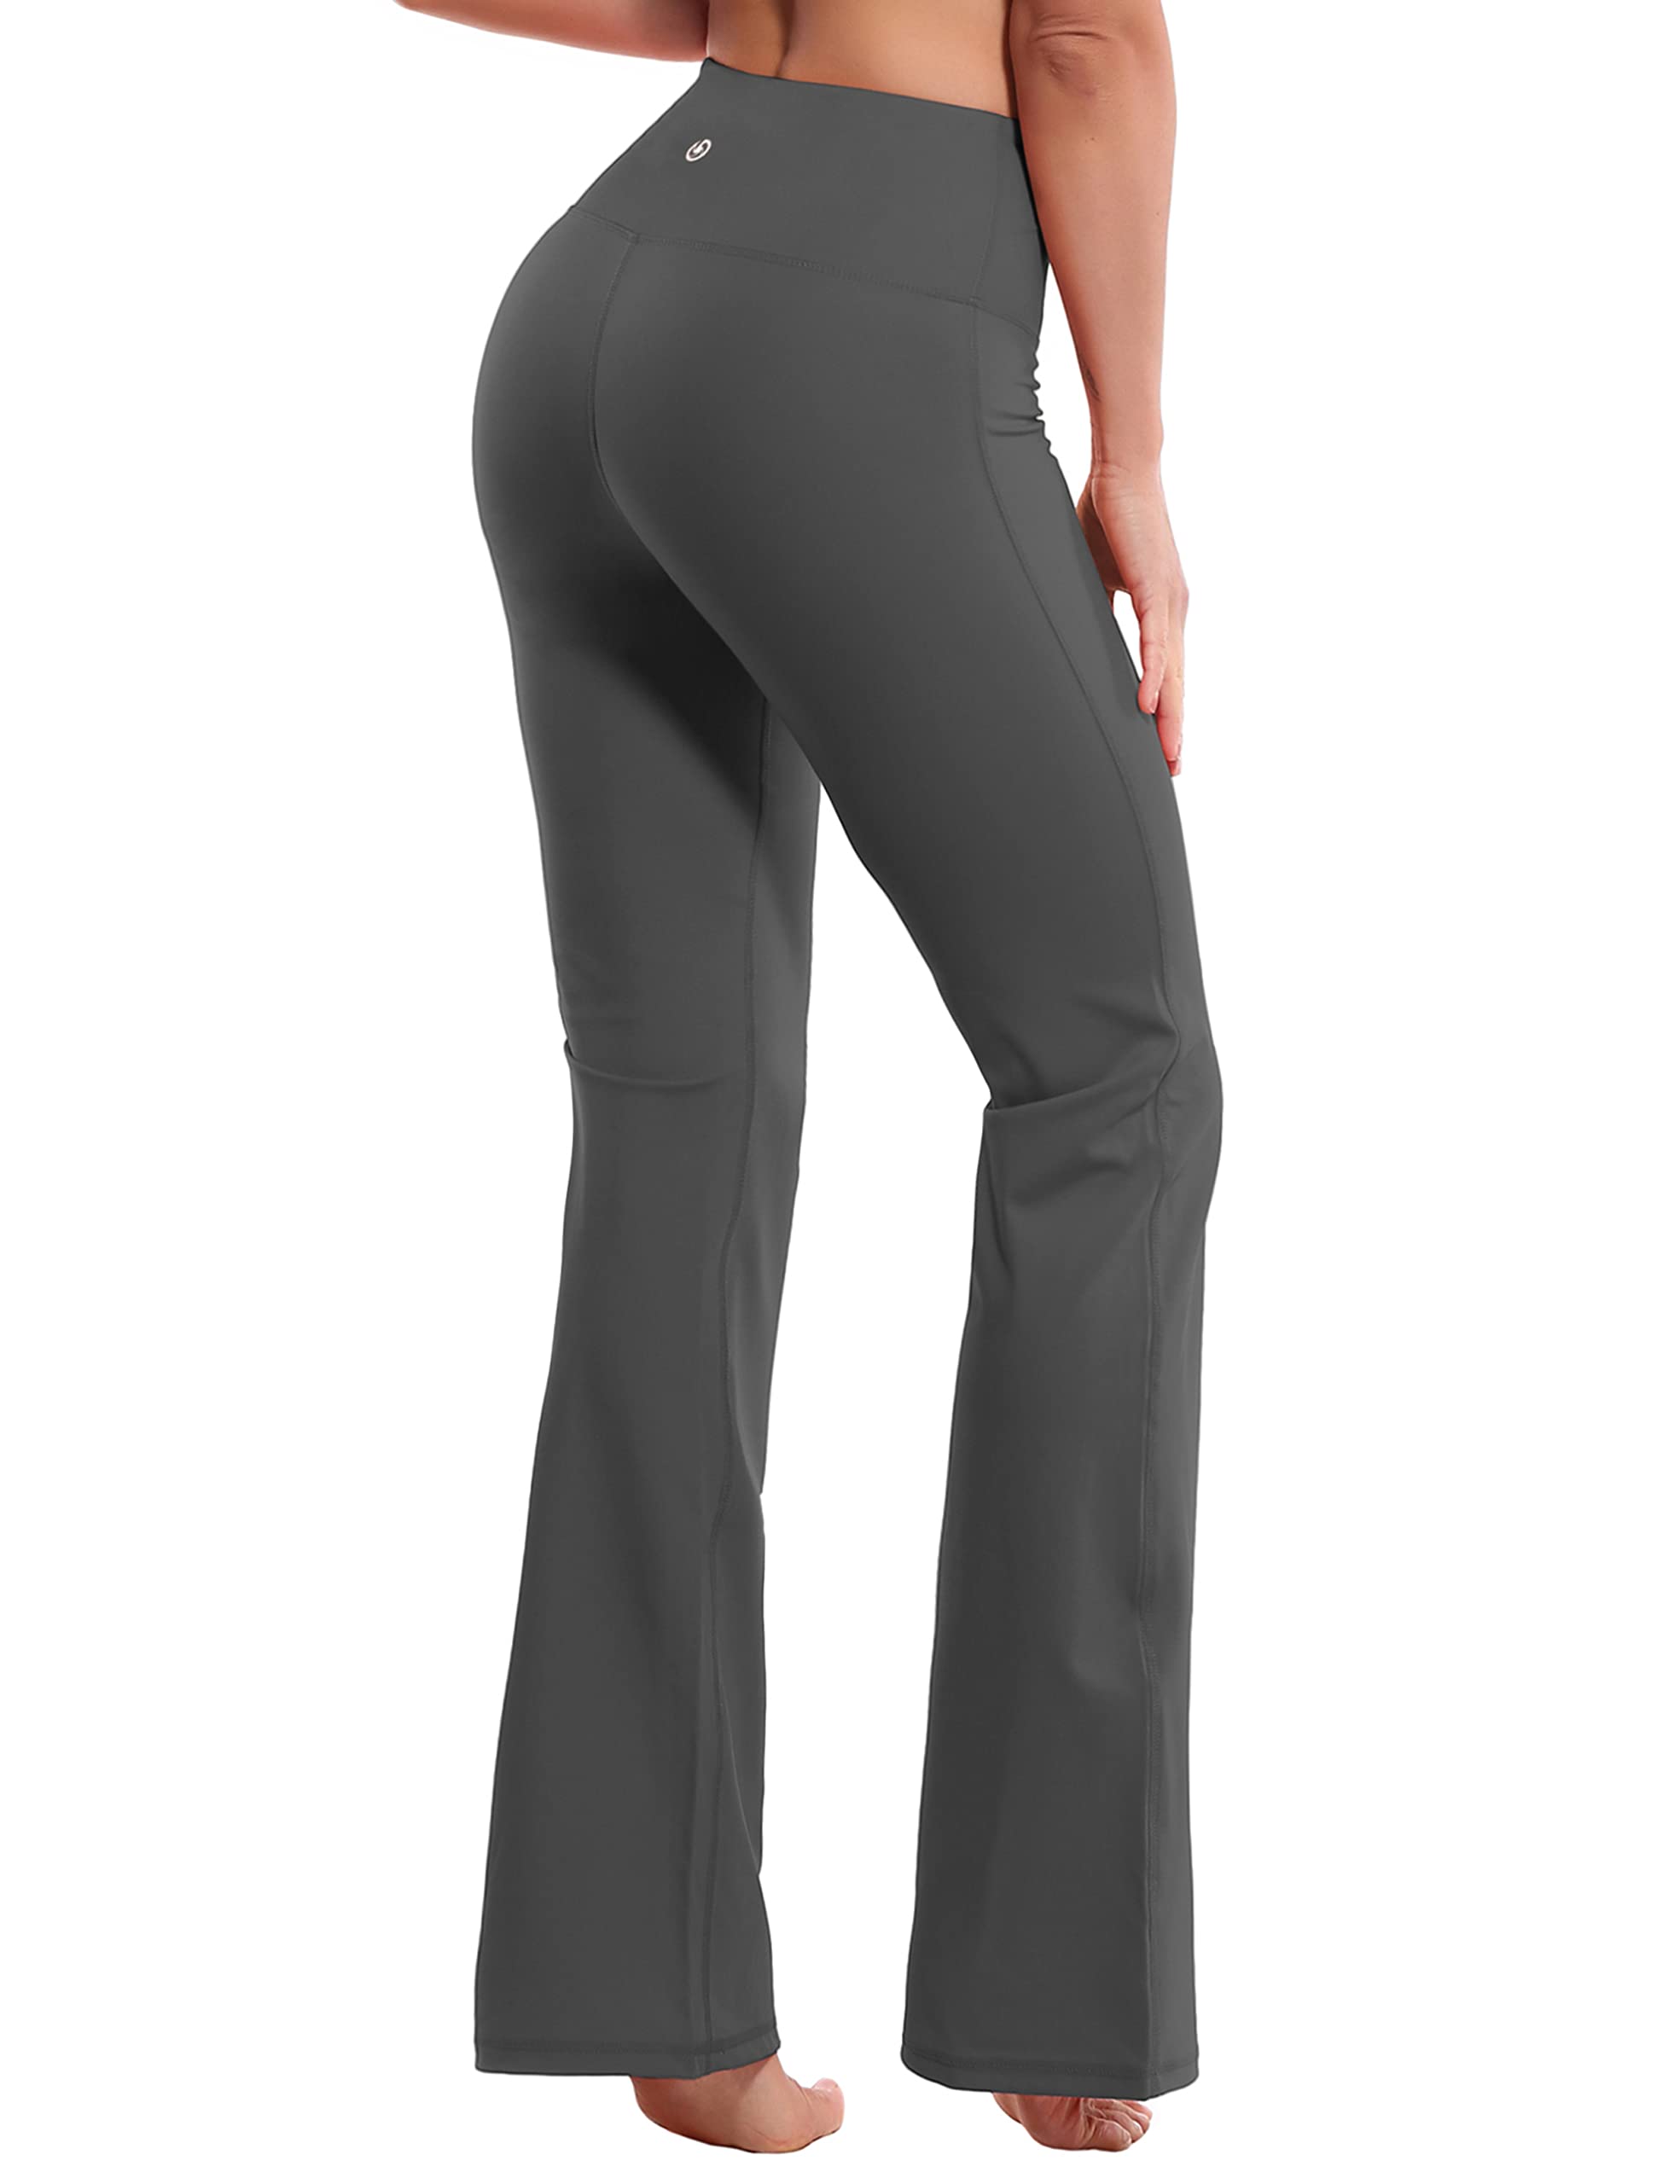 BUBBLELIME 2931333537 4 Styles Womens High Waist Bootcut Yoga Pants - Basic  Nylon_SHADOWcHARcOAL XL-29 Inseam